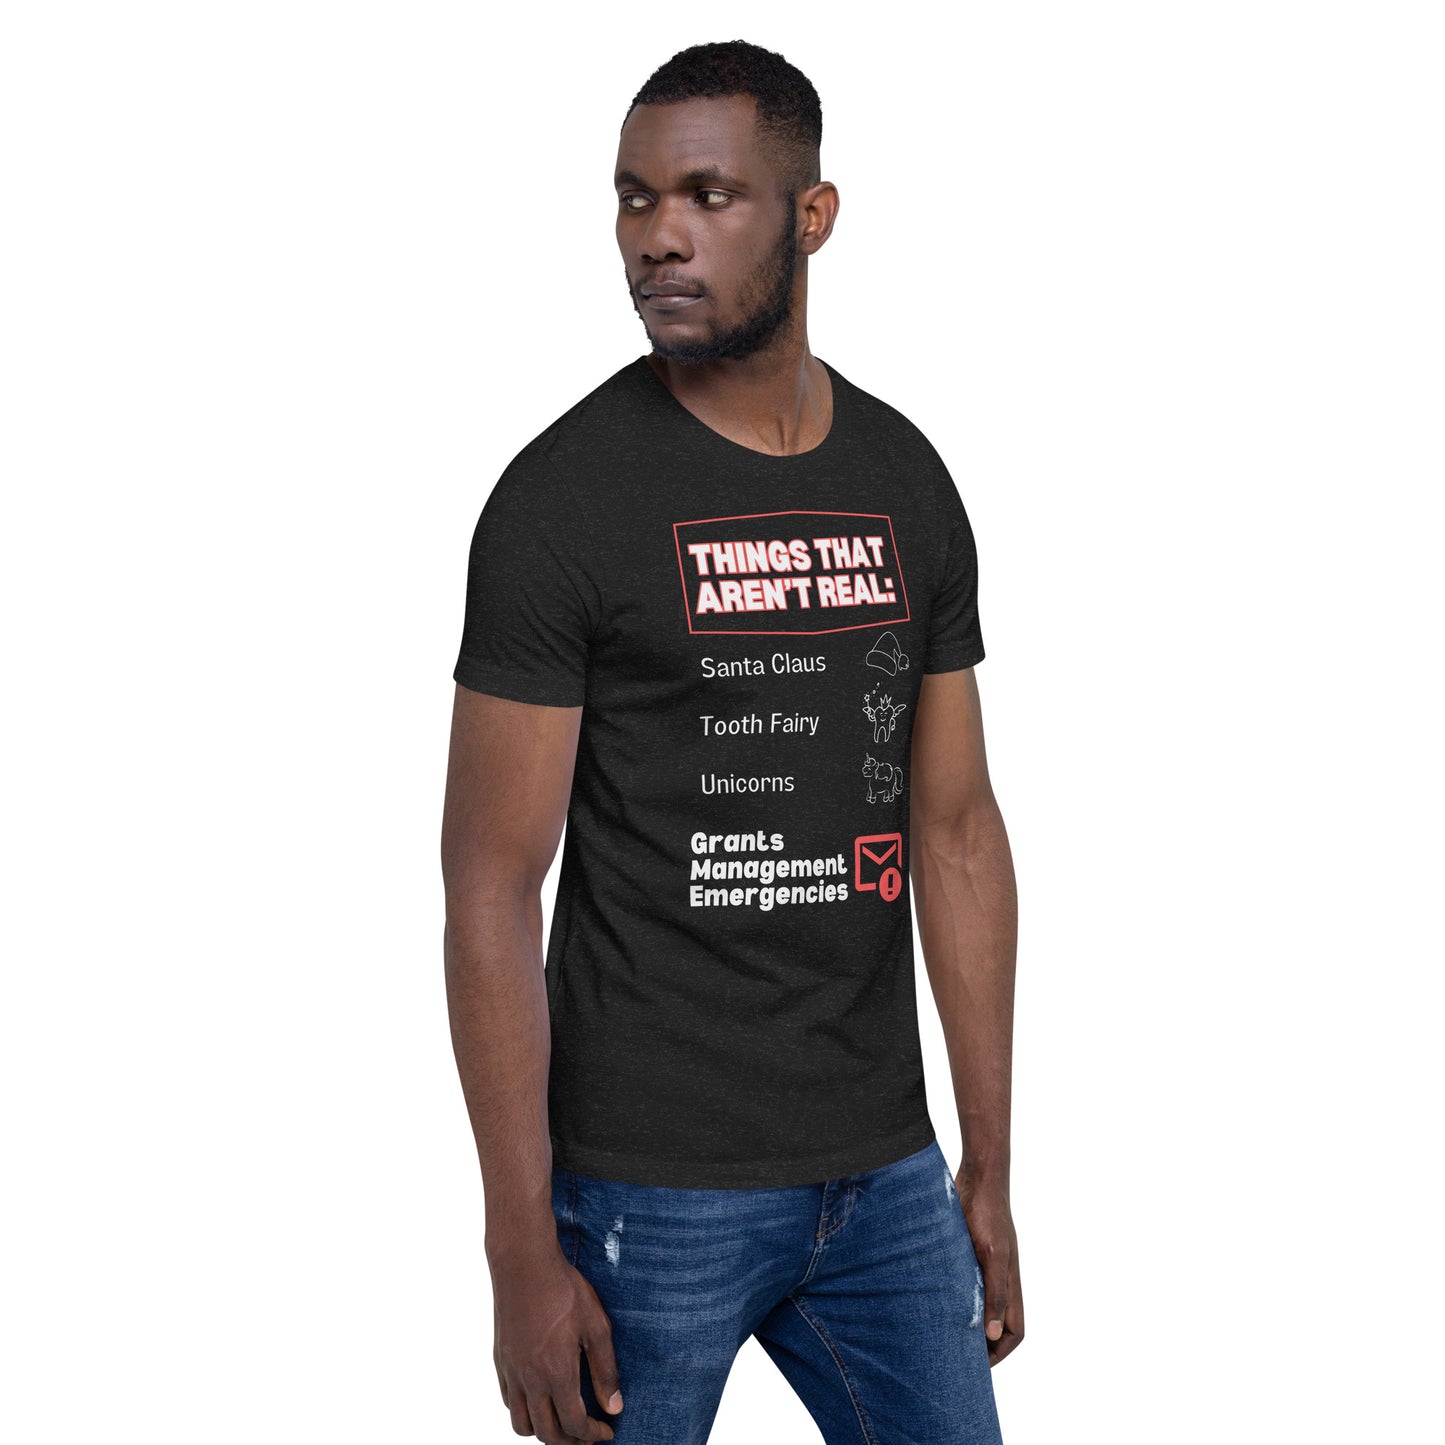 No Grants Management Emergencies dark Unisex t-shirt